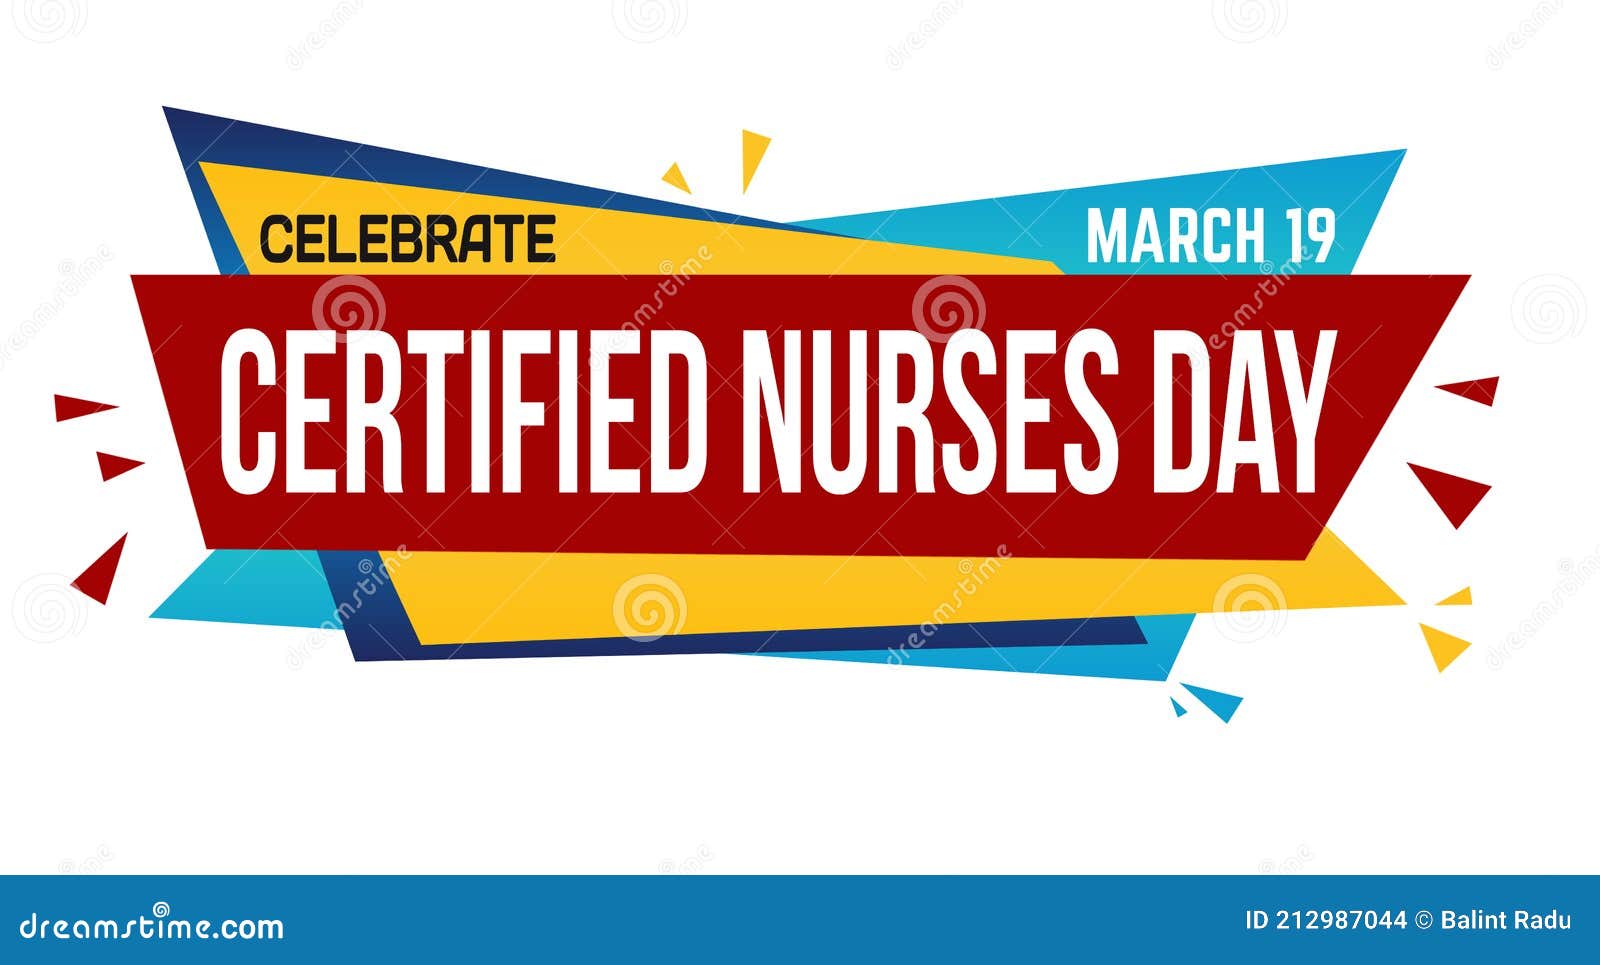 Certified Nurses Day Banner Design Stock Vector Illustration of